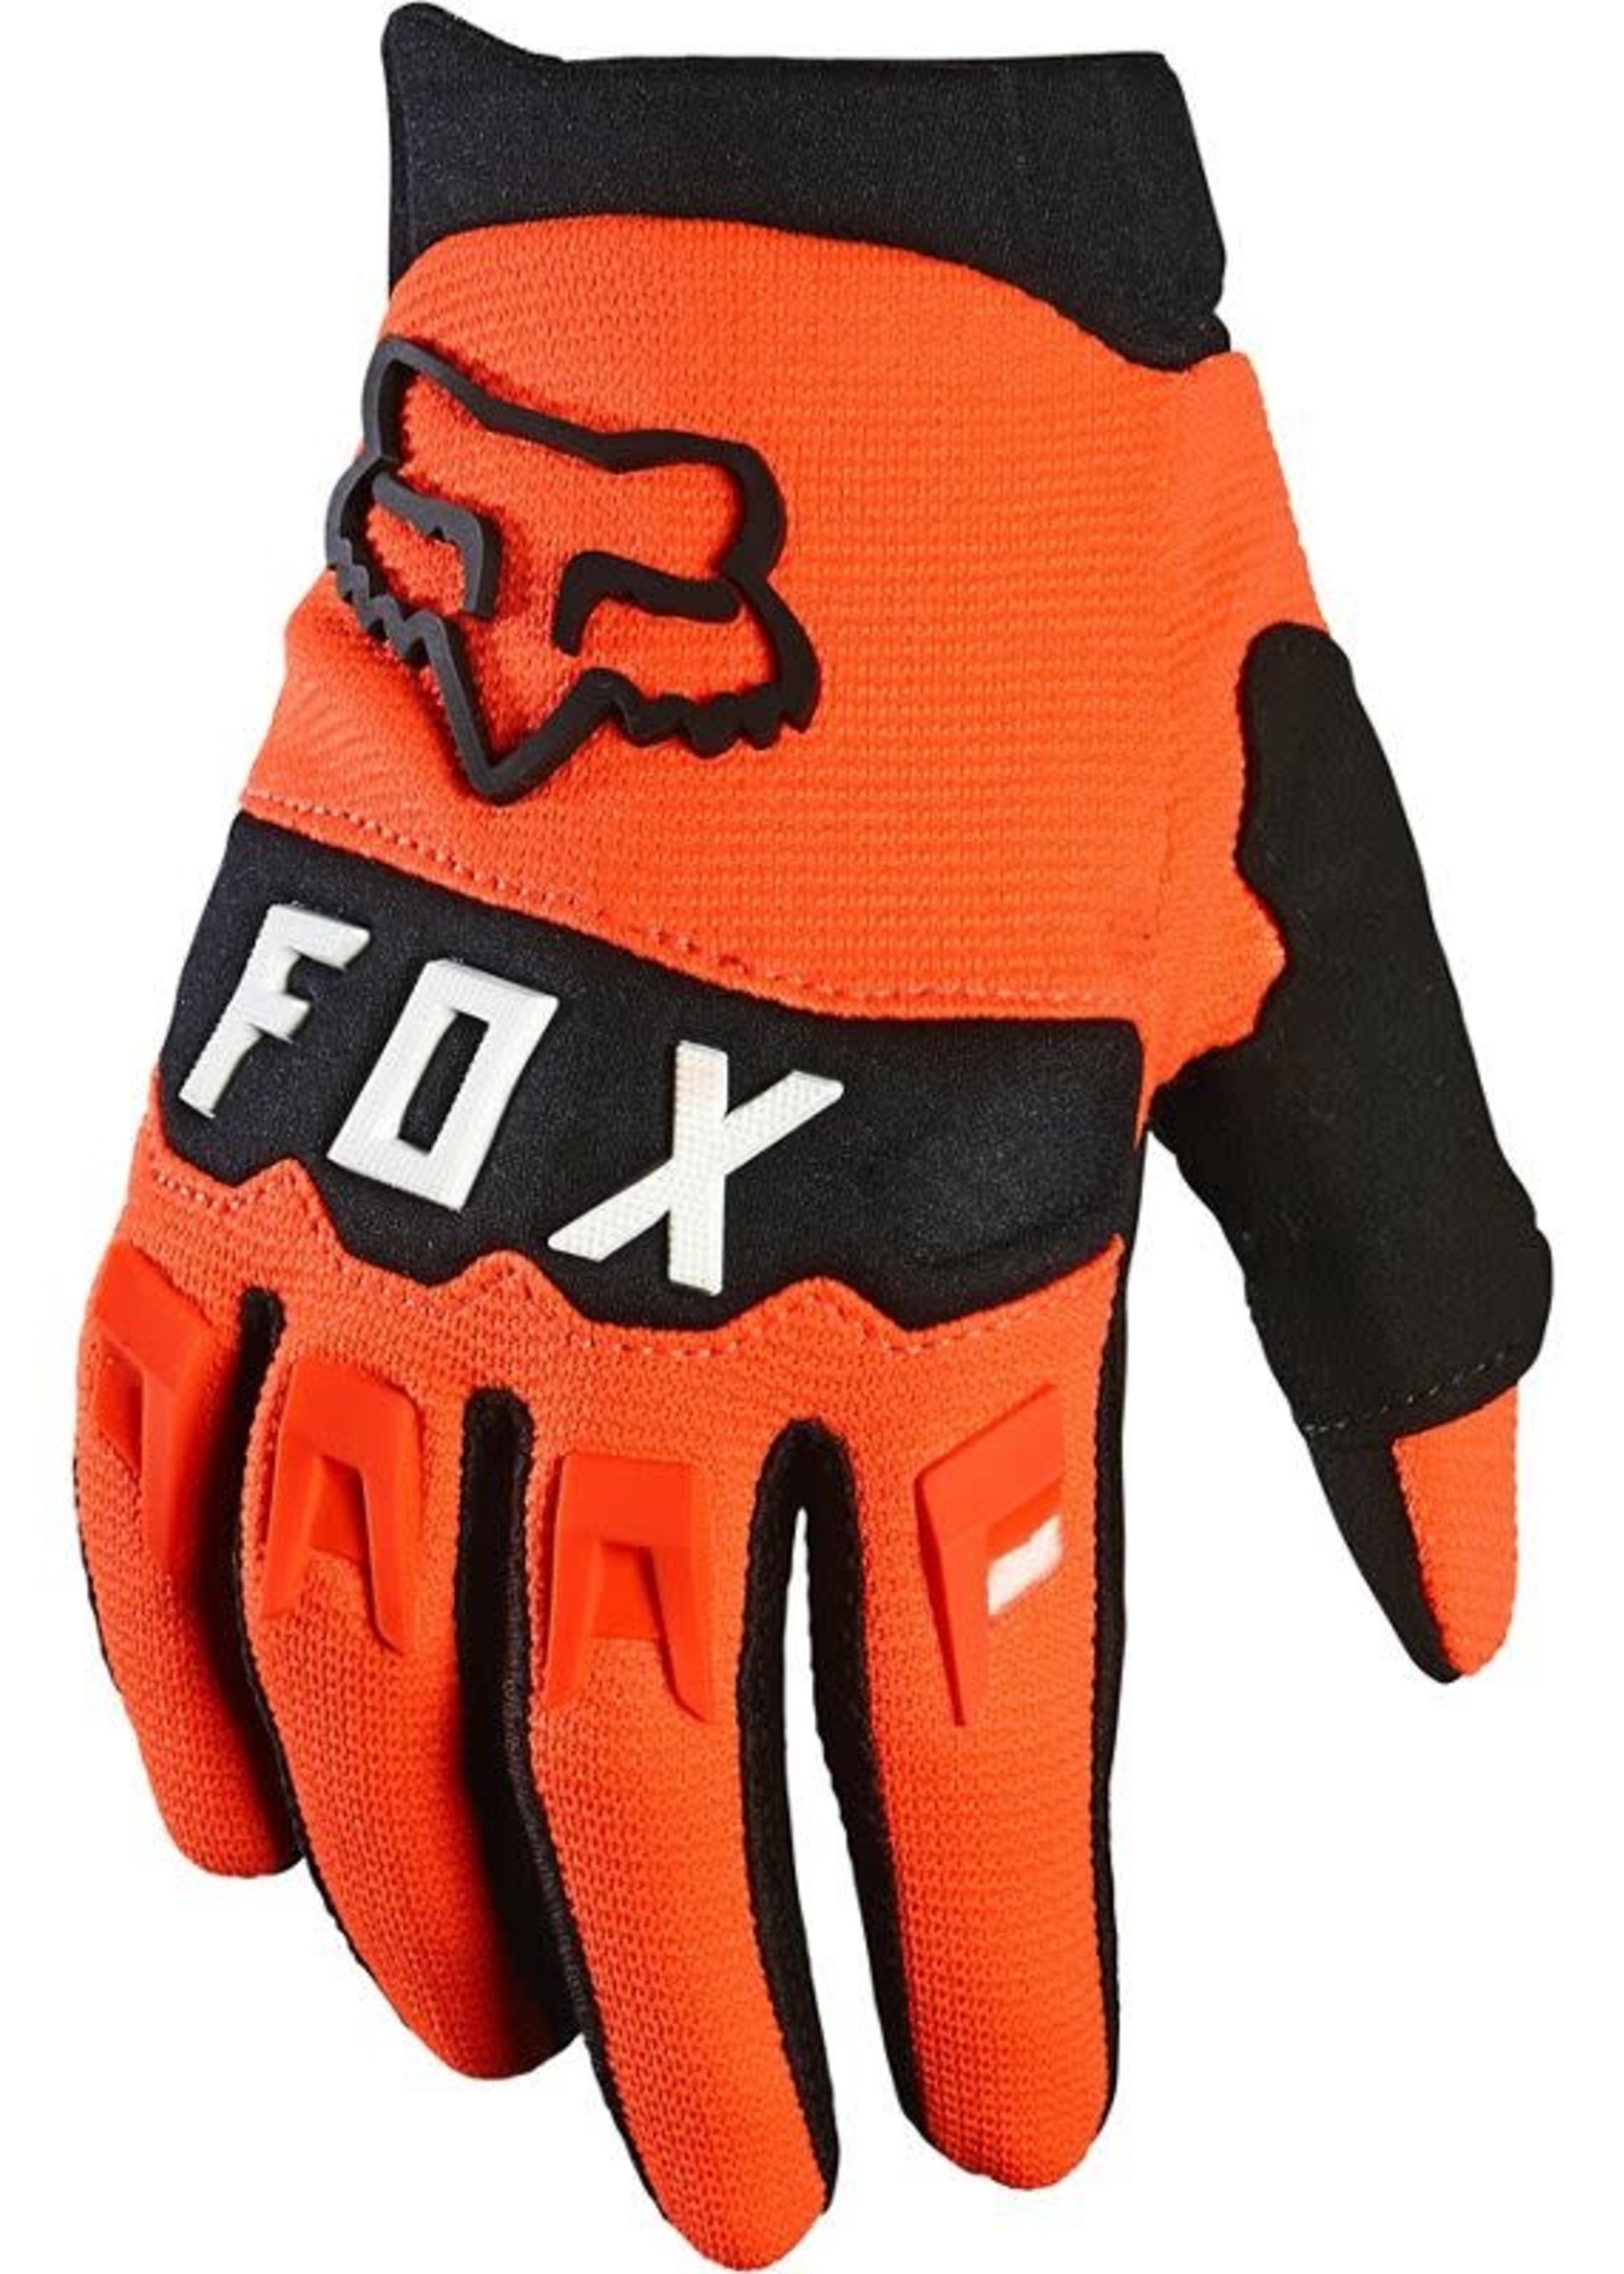 FOX HEAD Fox Dirtpaw Gloves Youth